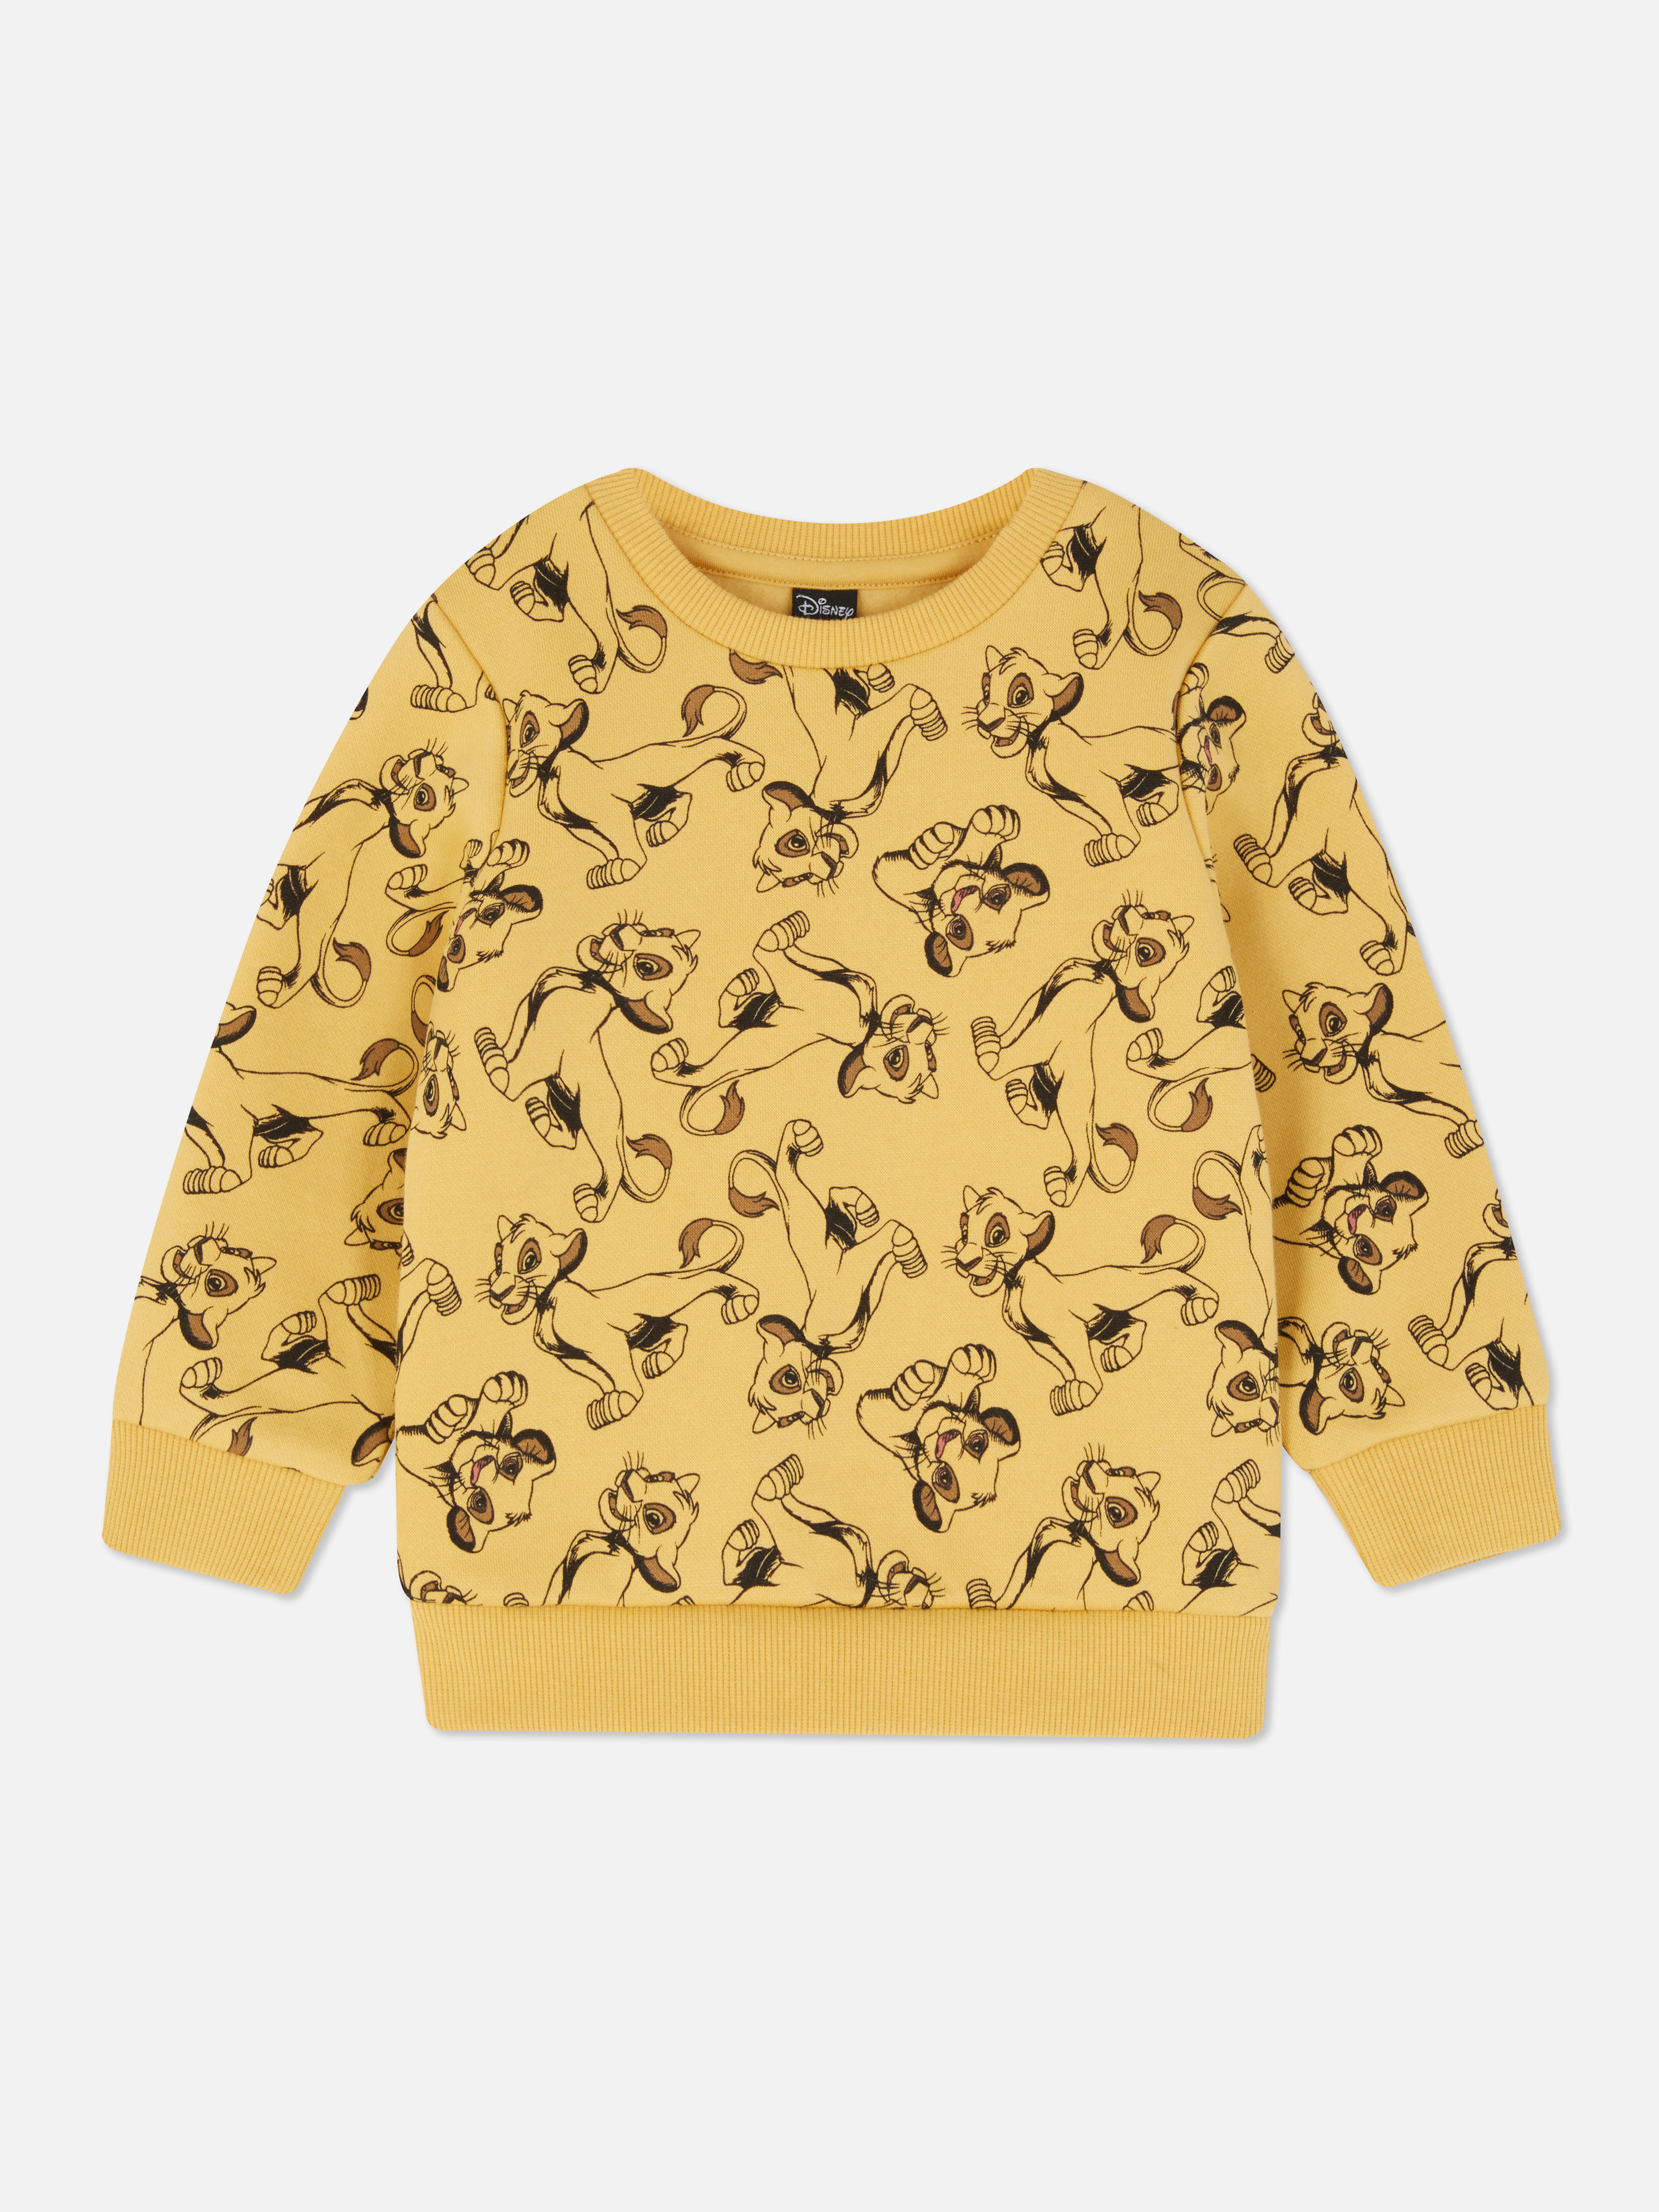 Disney's Lion King Print Sweatshirt | Baby Boy Clothes | Baby & Newborn ...